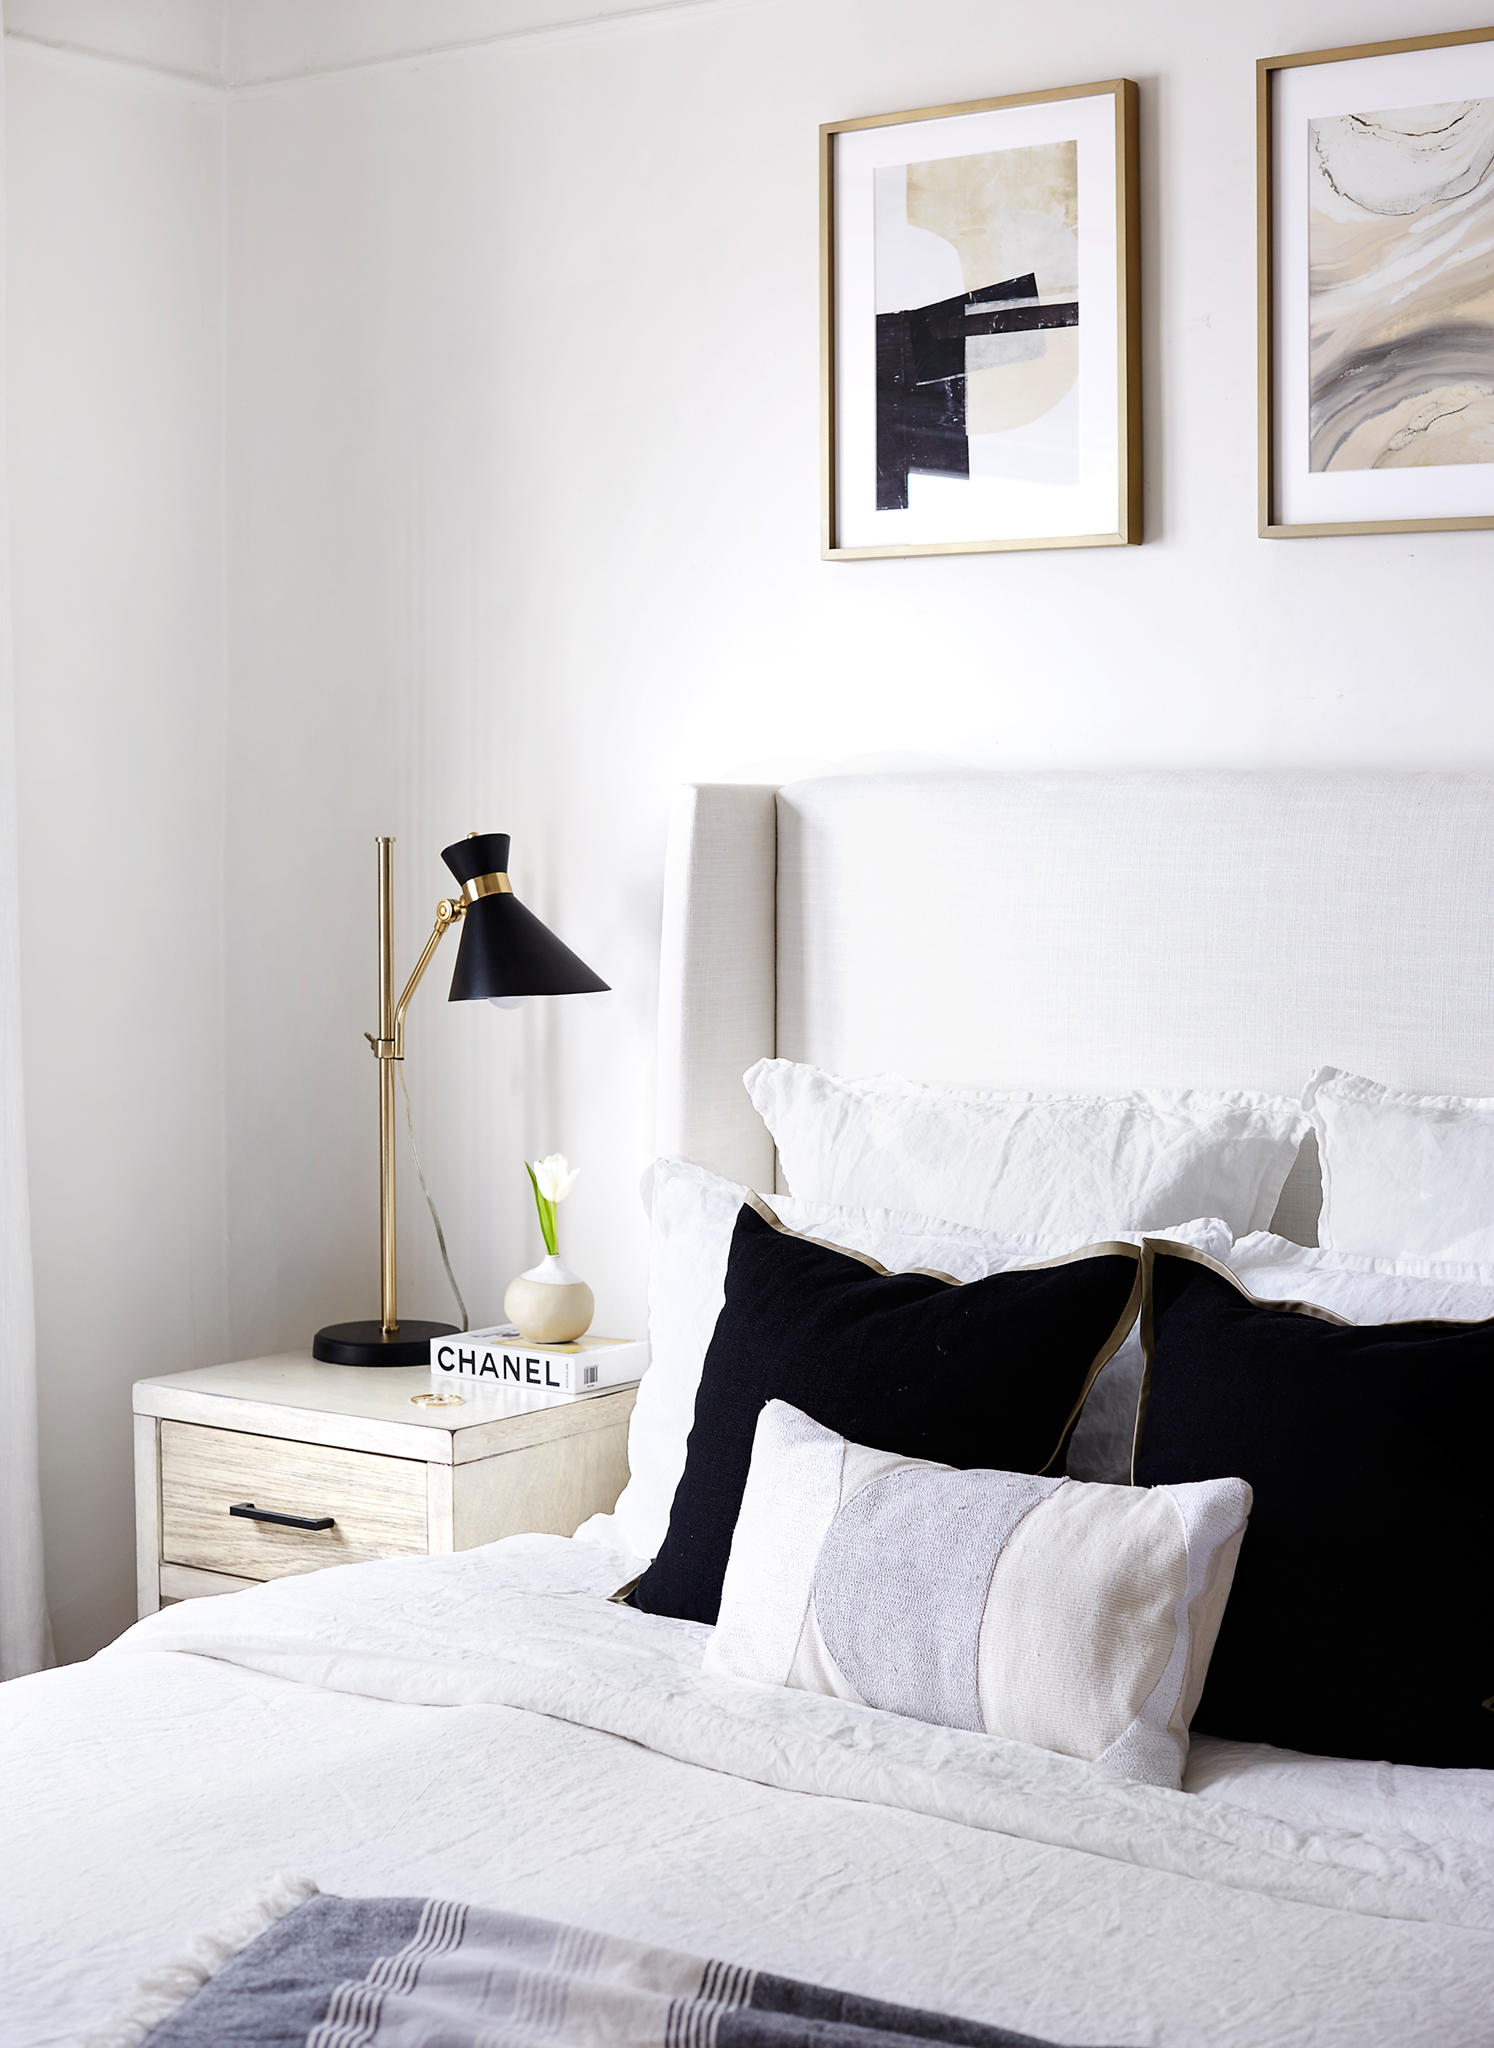 5 Essential Items for Small Bedrooms by Pam Hetlinger | TheGirlFromPanama | Joss & Main drawer, bright bedroom interior, parachute home bedding, bedroom interior inspiration, fashion blogger bedroom